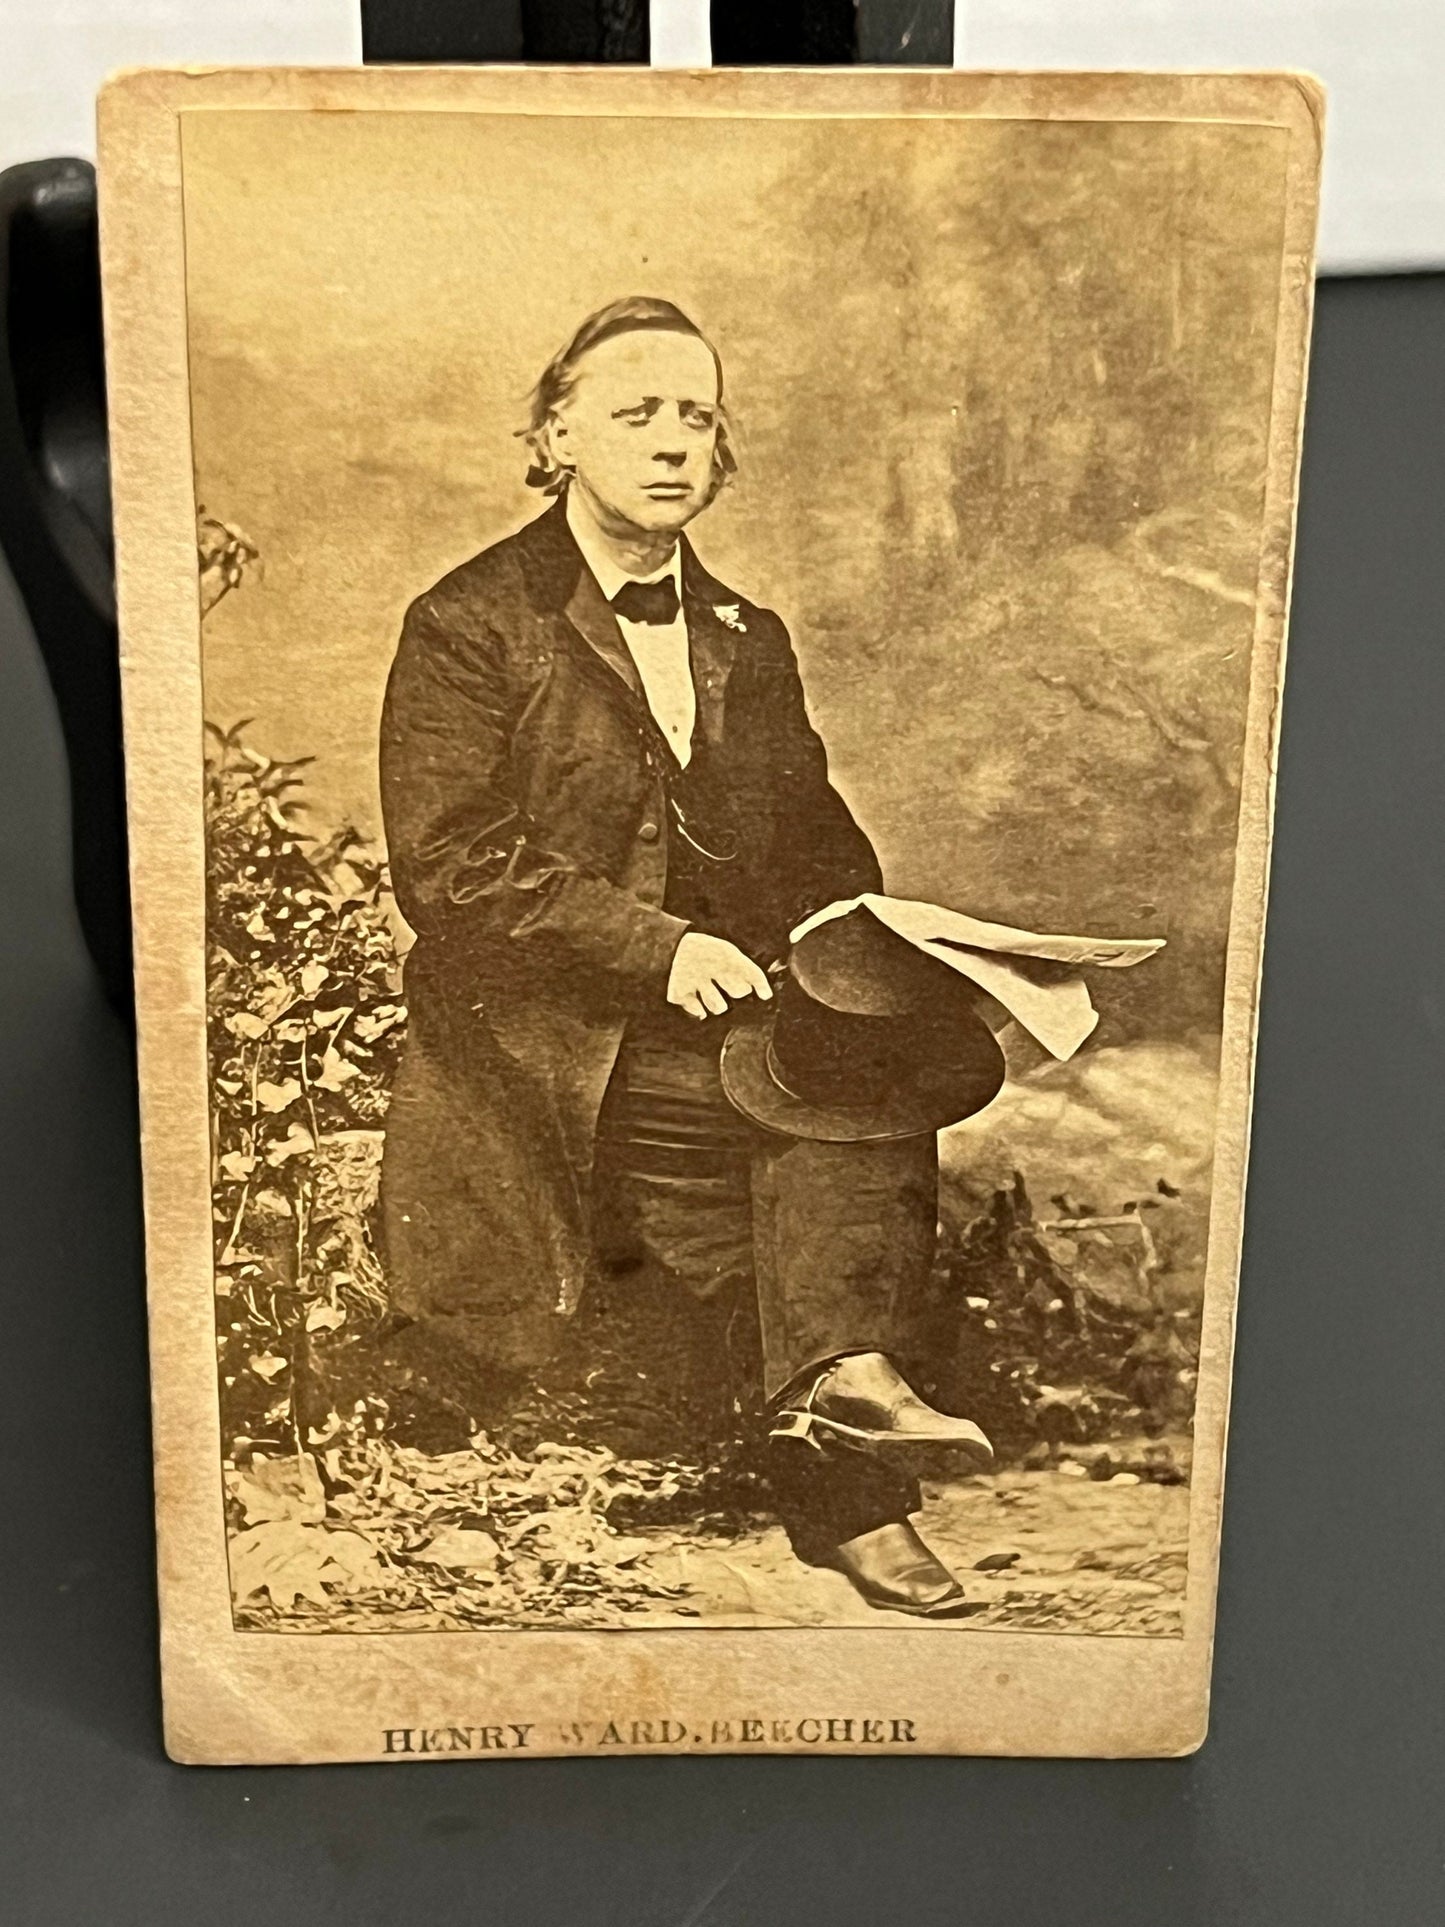 Antique cdv photo civil war era henry wars beecher famous abolitionist 1860s